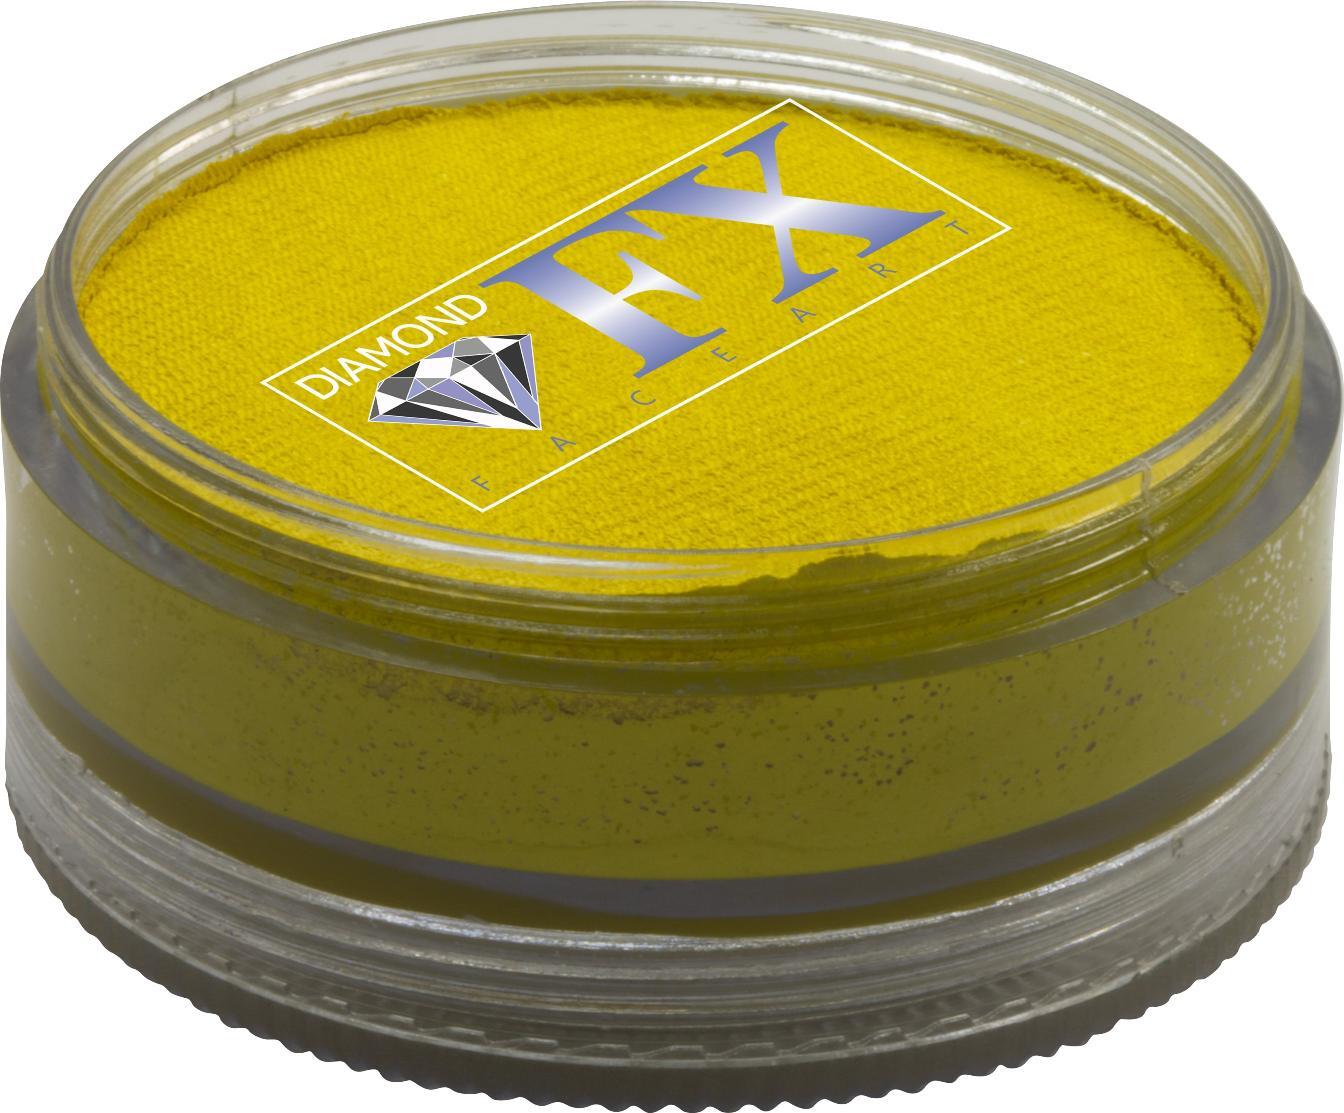 Diamond FX Yellow Metallic 90g - Small Image